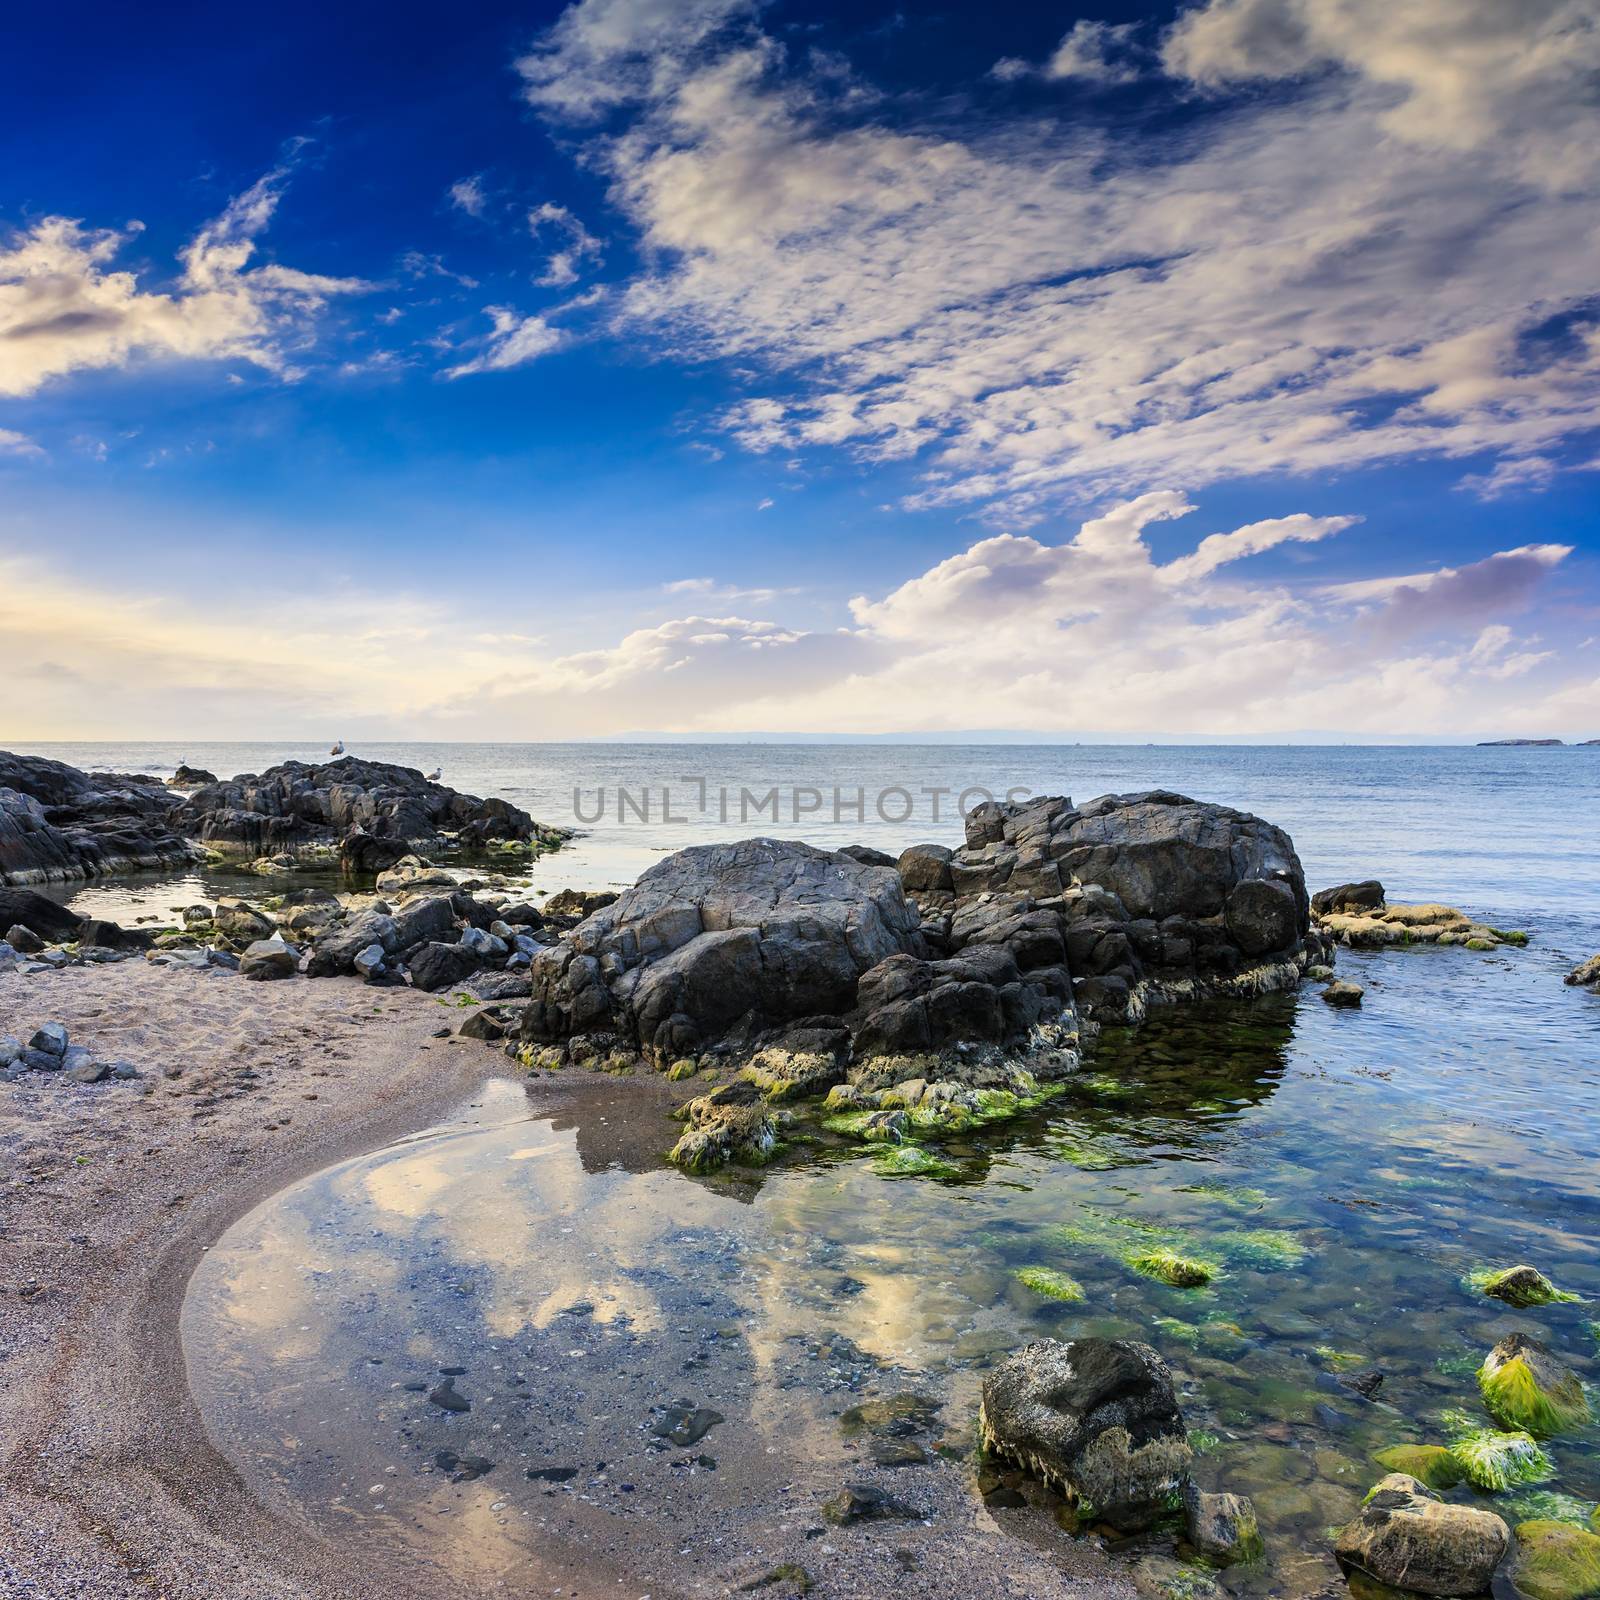 sea shore landscape with boulders by Pellinni